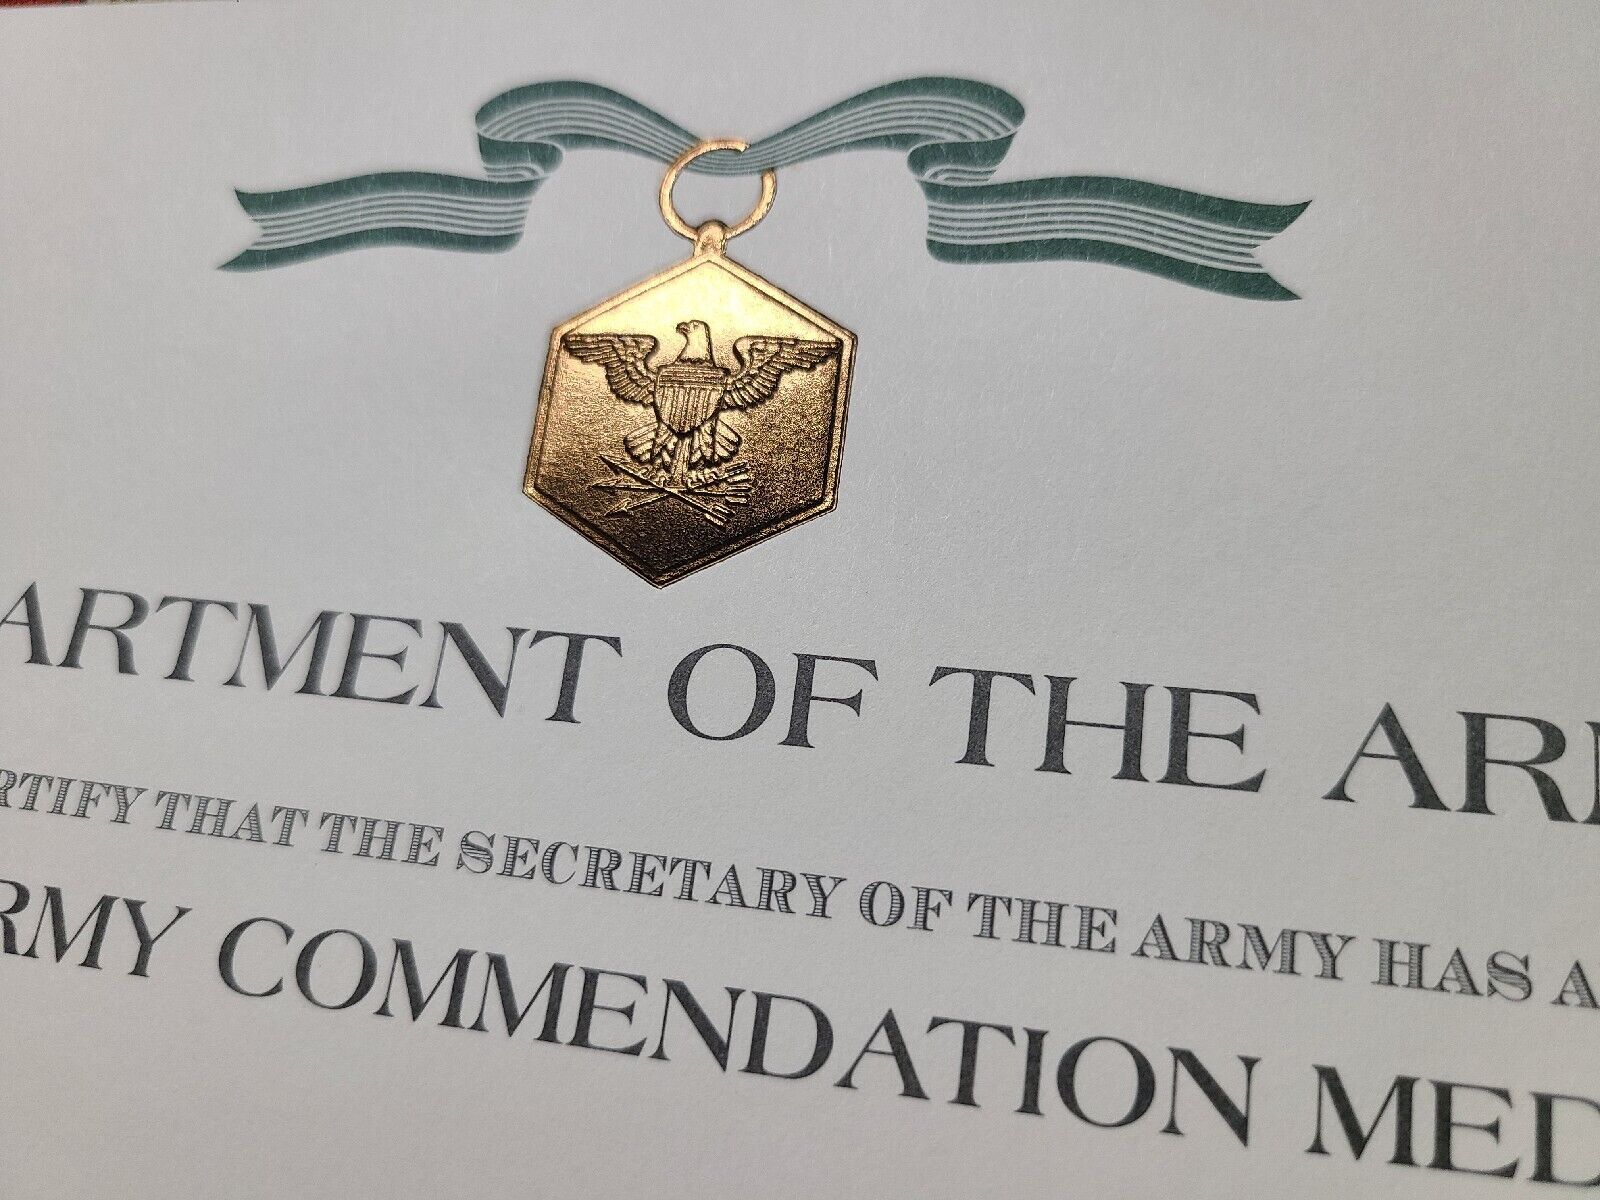 Original US Army Commendation Medal Certificate (Original Issue).